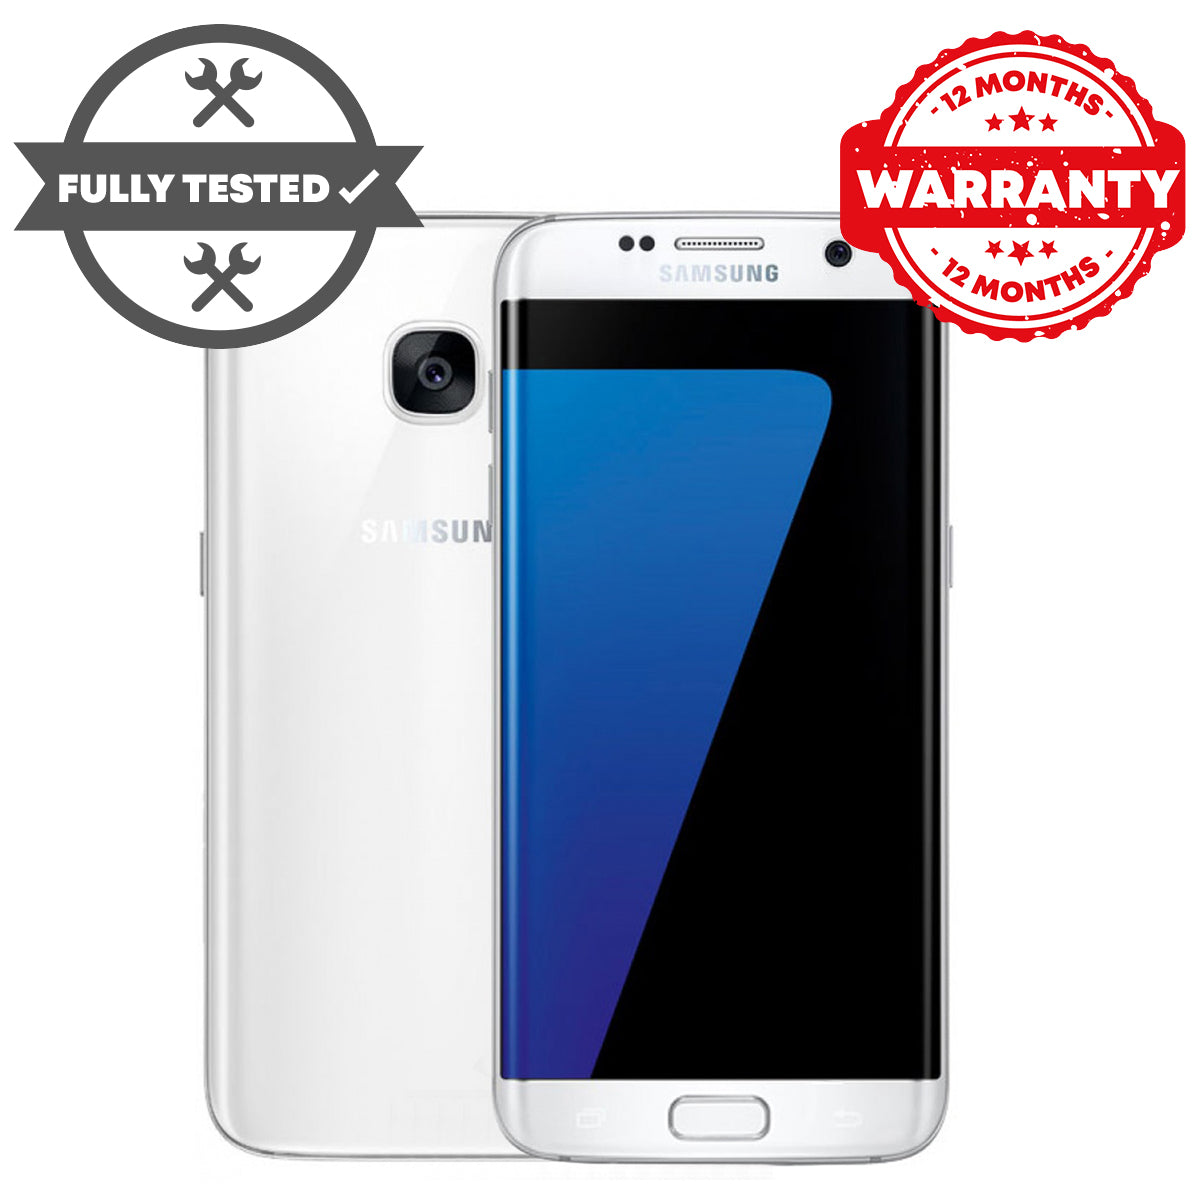 Samsung Galaxy S7 Edge  Silver Sim Free - Unlocked